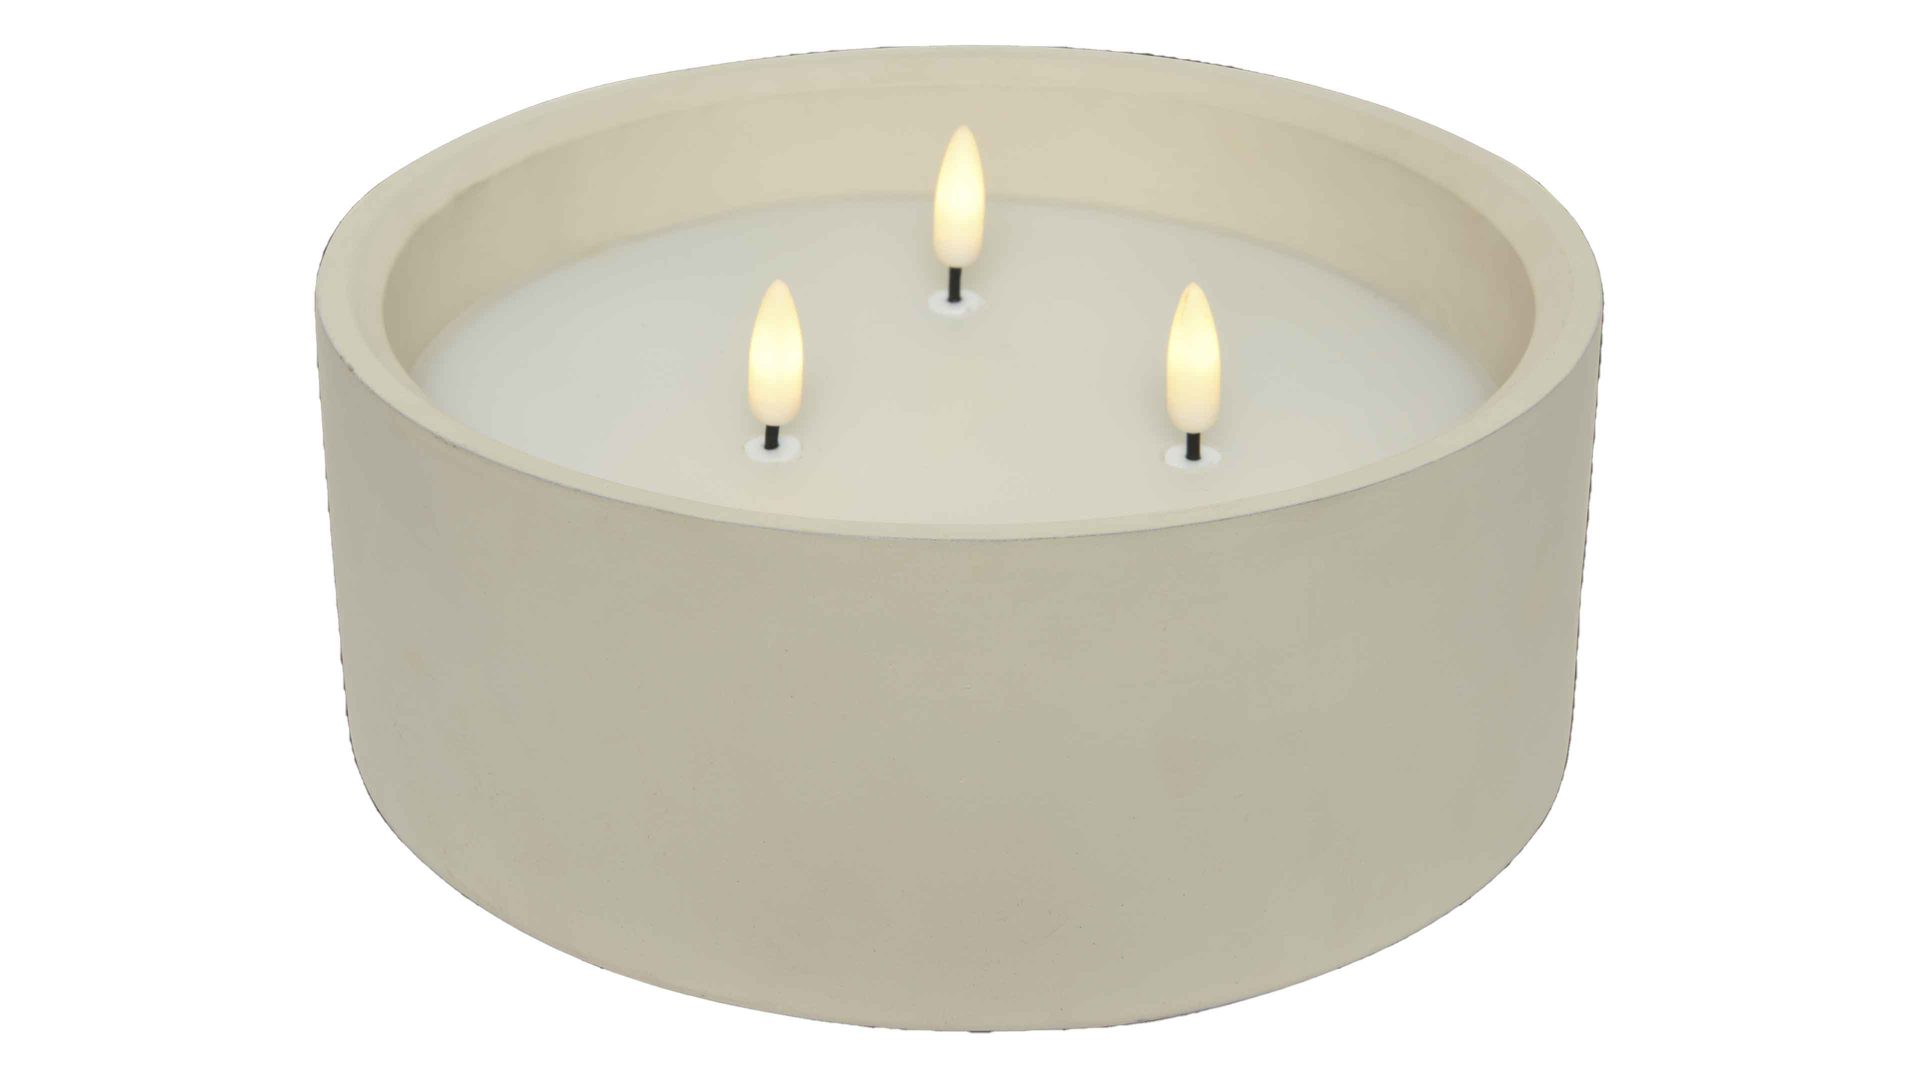 Kerze Kaemingk aus Wachs in Weiß LED Outdoor-Kerze Wachs & Beton - drei Flammen